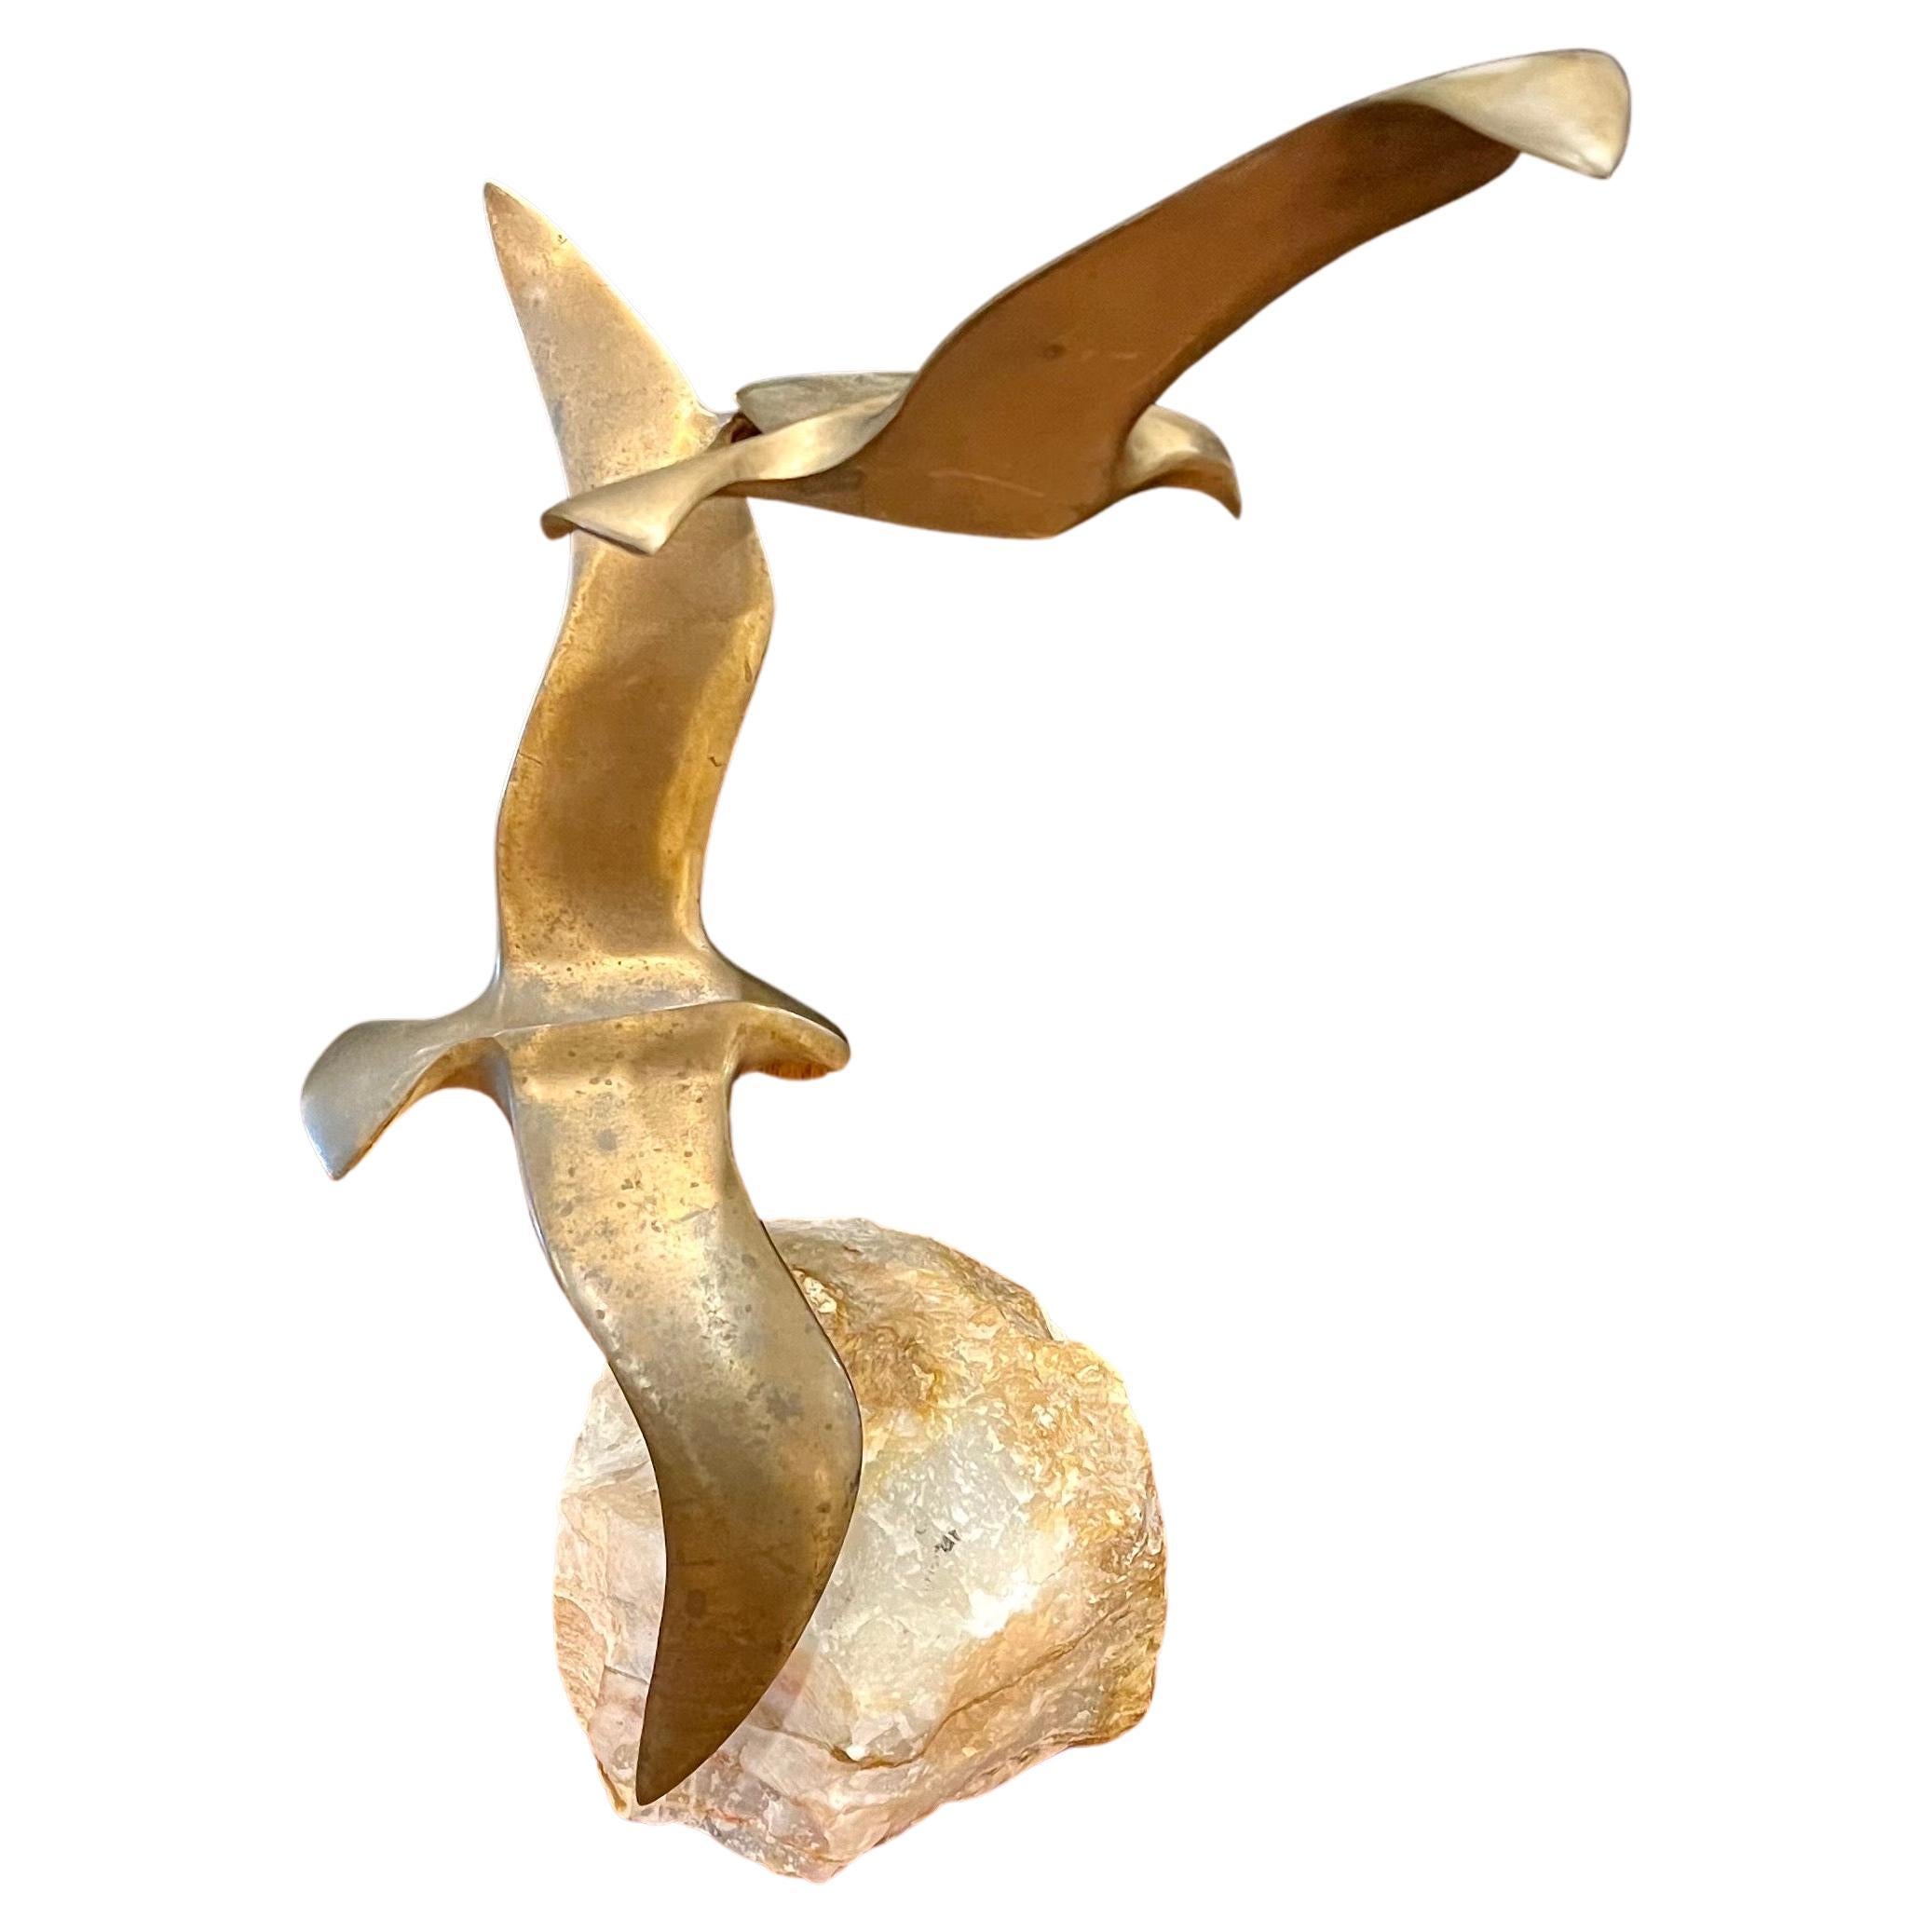 Seltene fliegende Vögel-Skulptur in Bronze-Finish, Sockel aus Rohmarmor, signiert Jere im Angebot